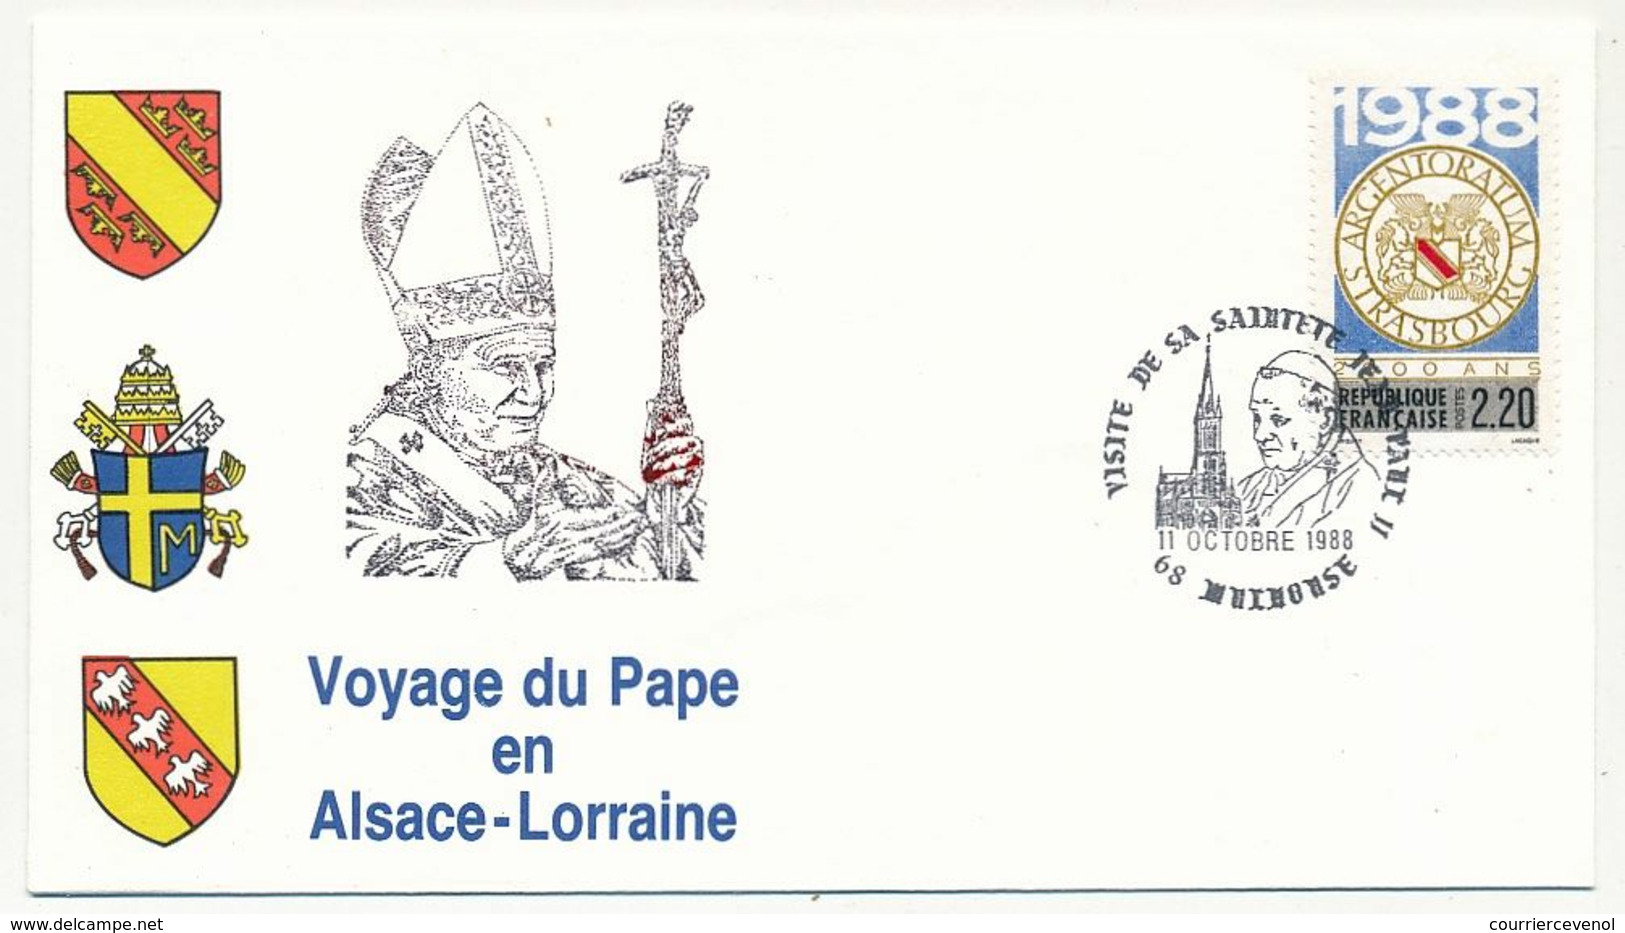 FRANCE - 7 Enveloppes Voyage Du Pape En Alsace Lorraine 1988 + VATICAN - 1 Env Idem - Christendom